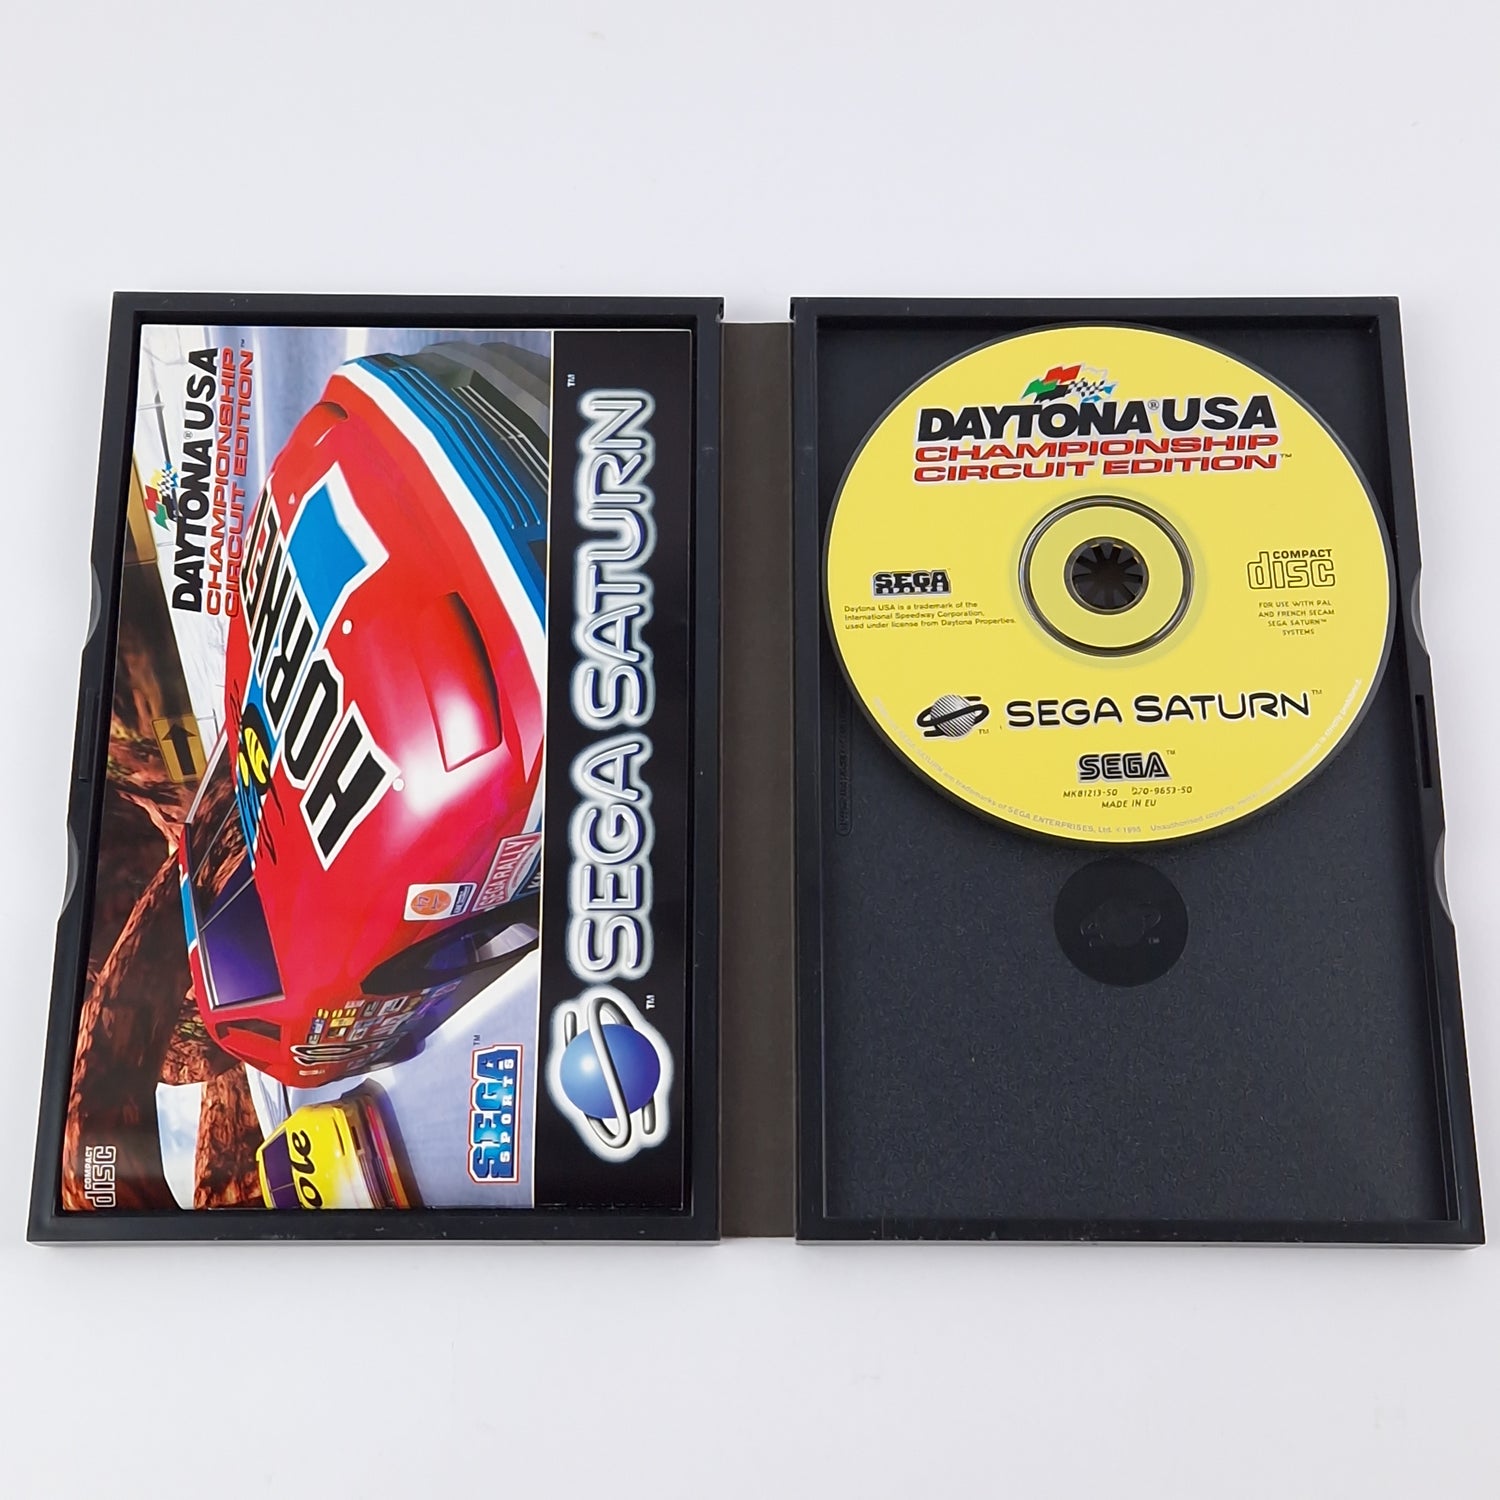 Sega Saturn game: Daytona USA Championship Circuit Edition - original packaging & instructions